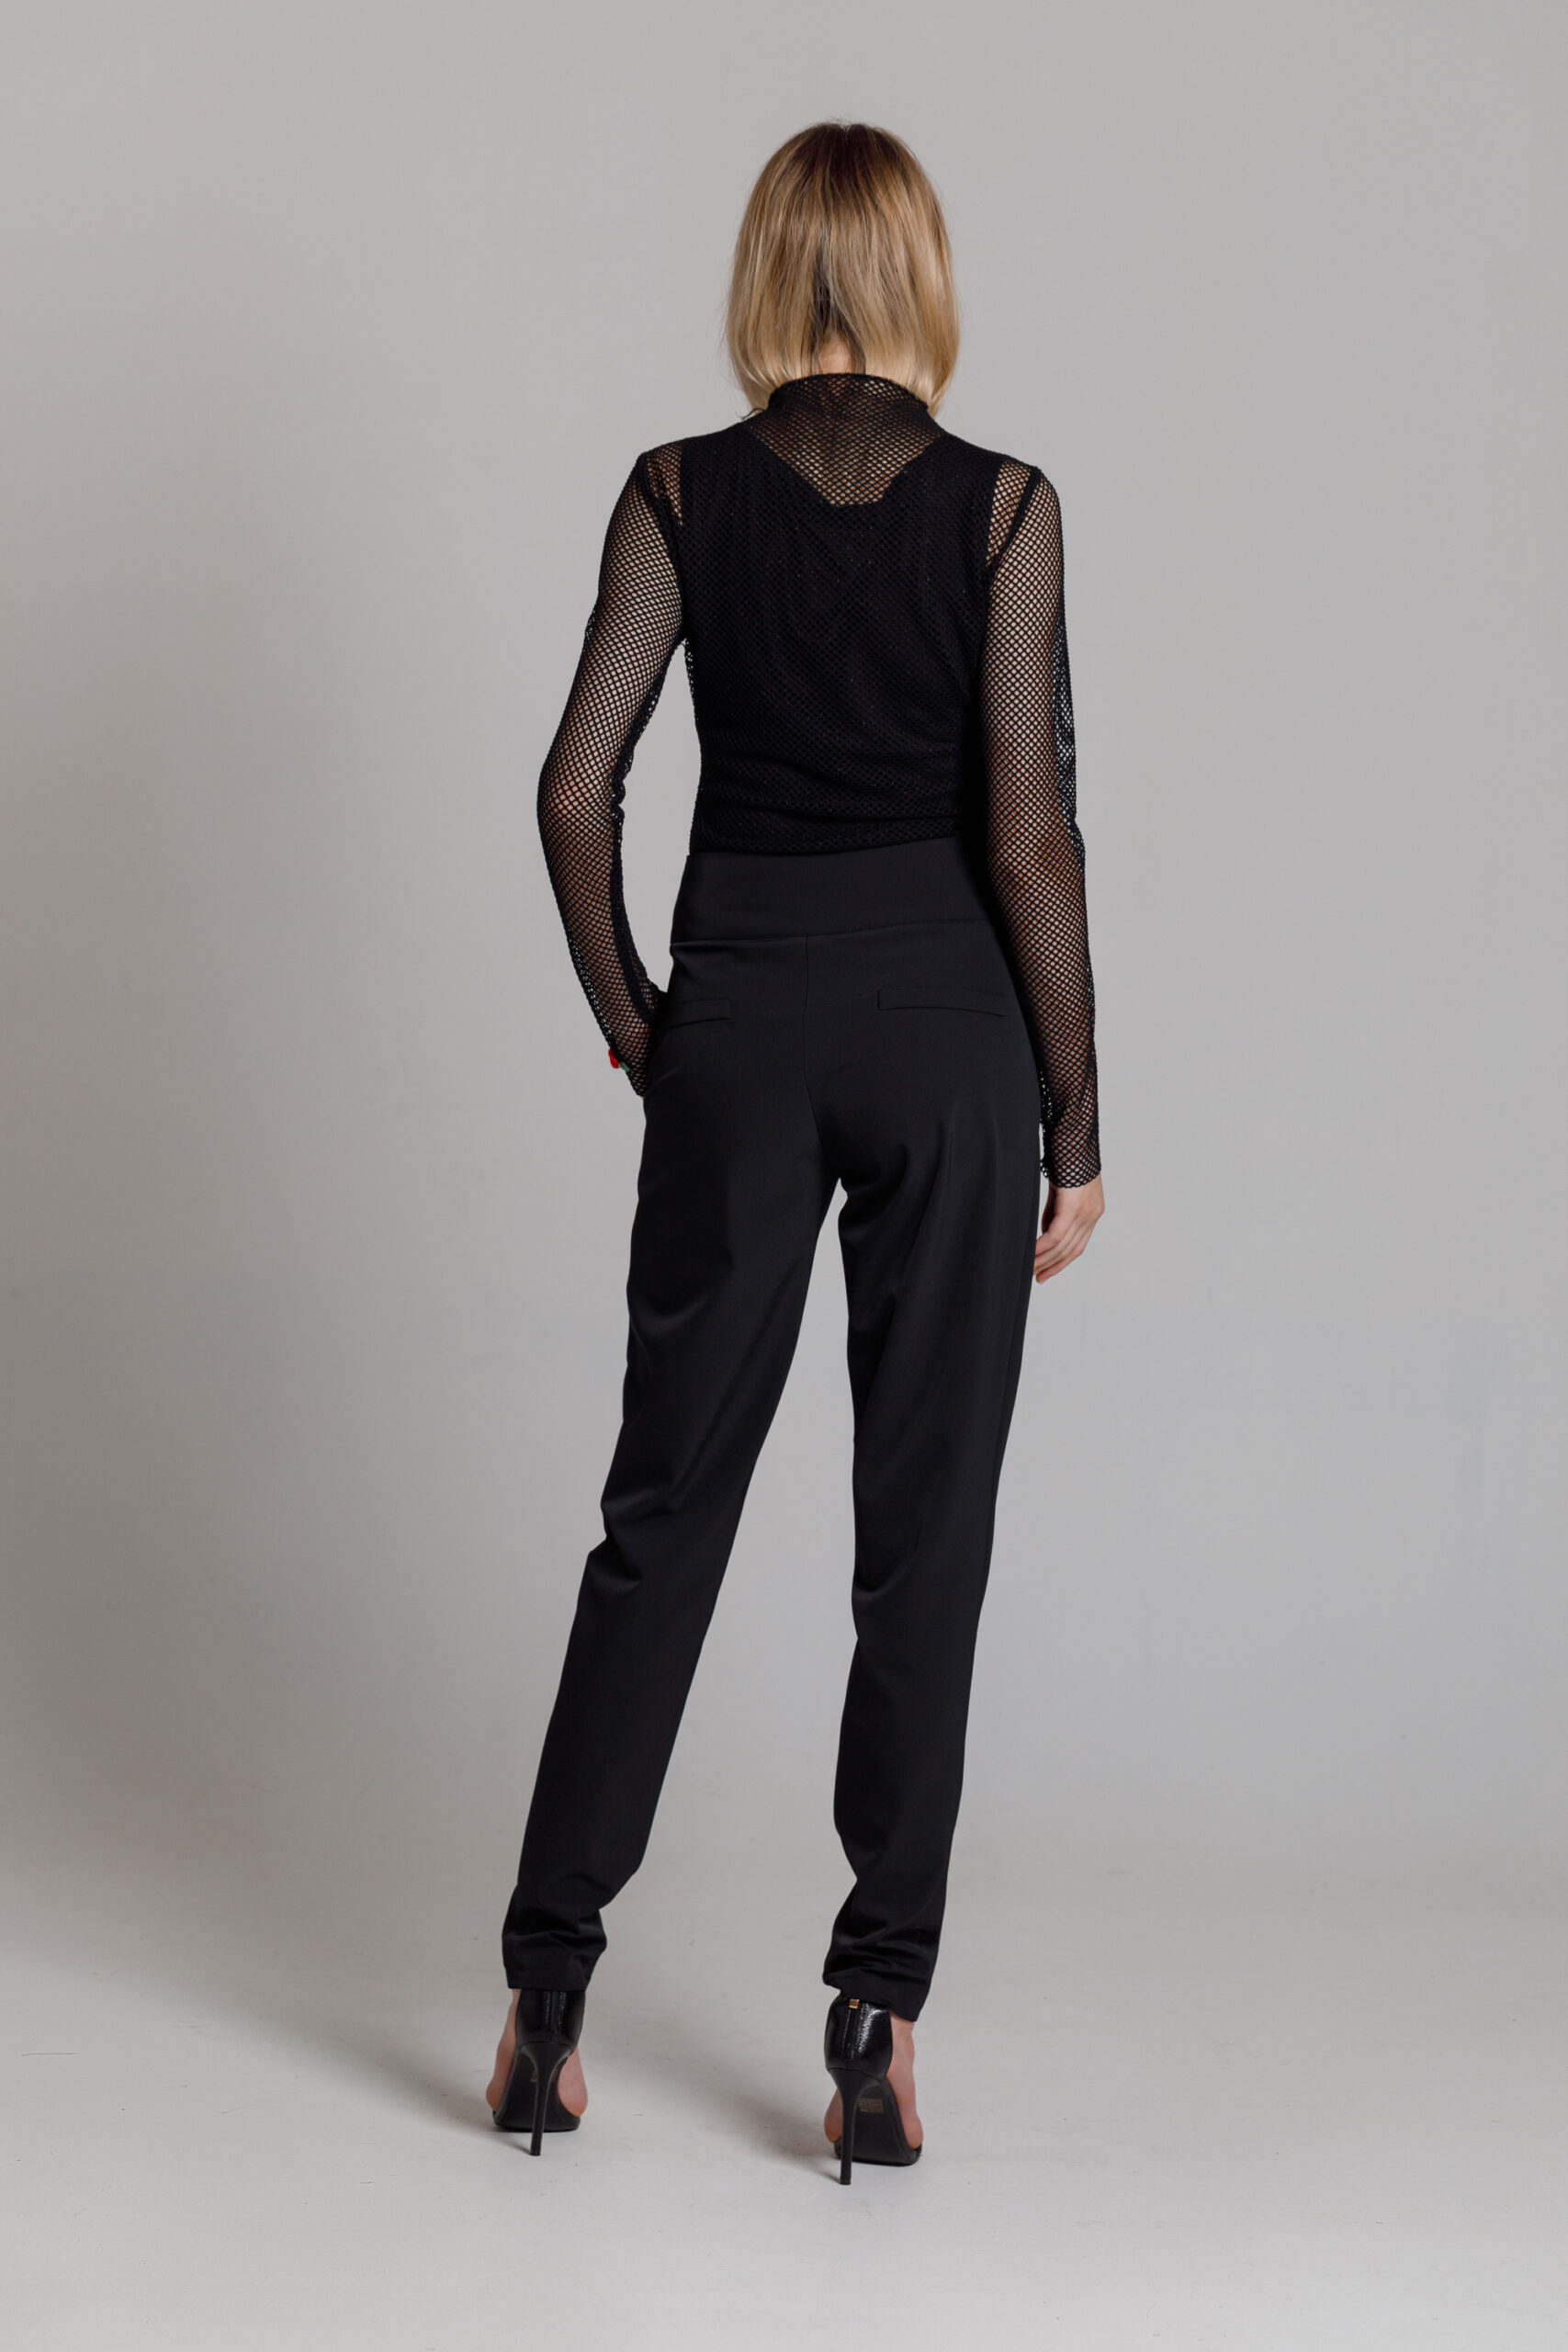 Elegant black LEONARD pants. Natural fabrics, original design, handmade embroidery